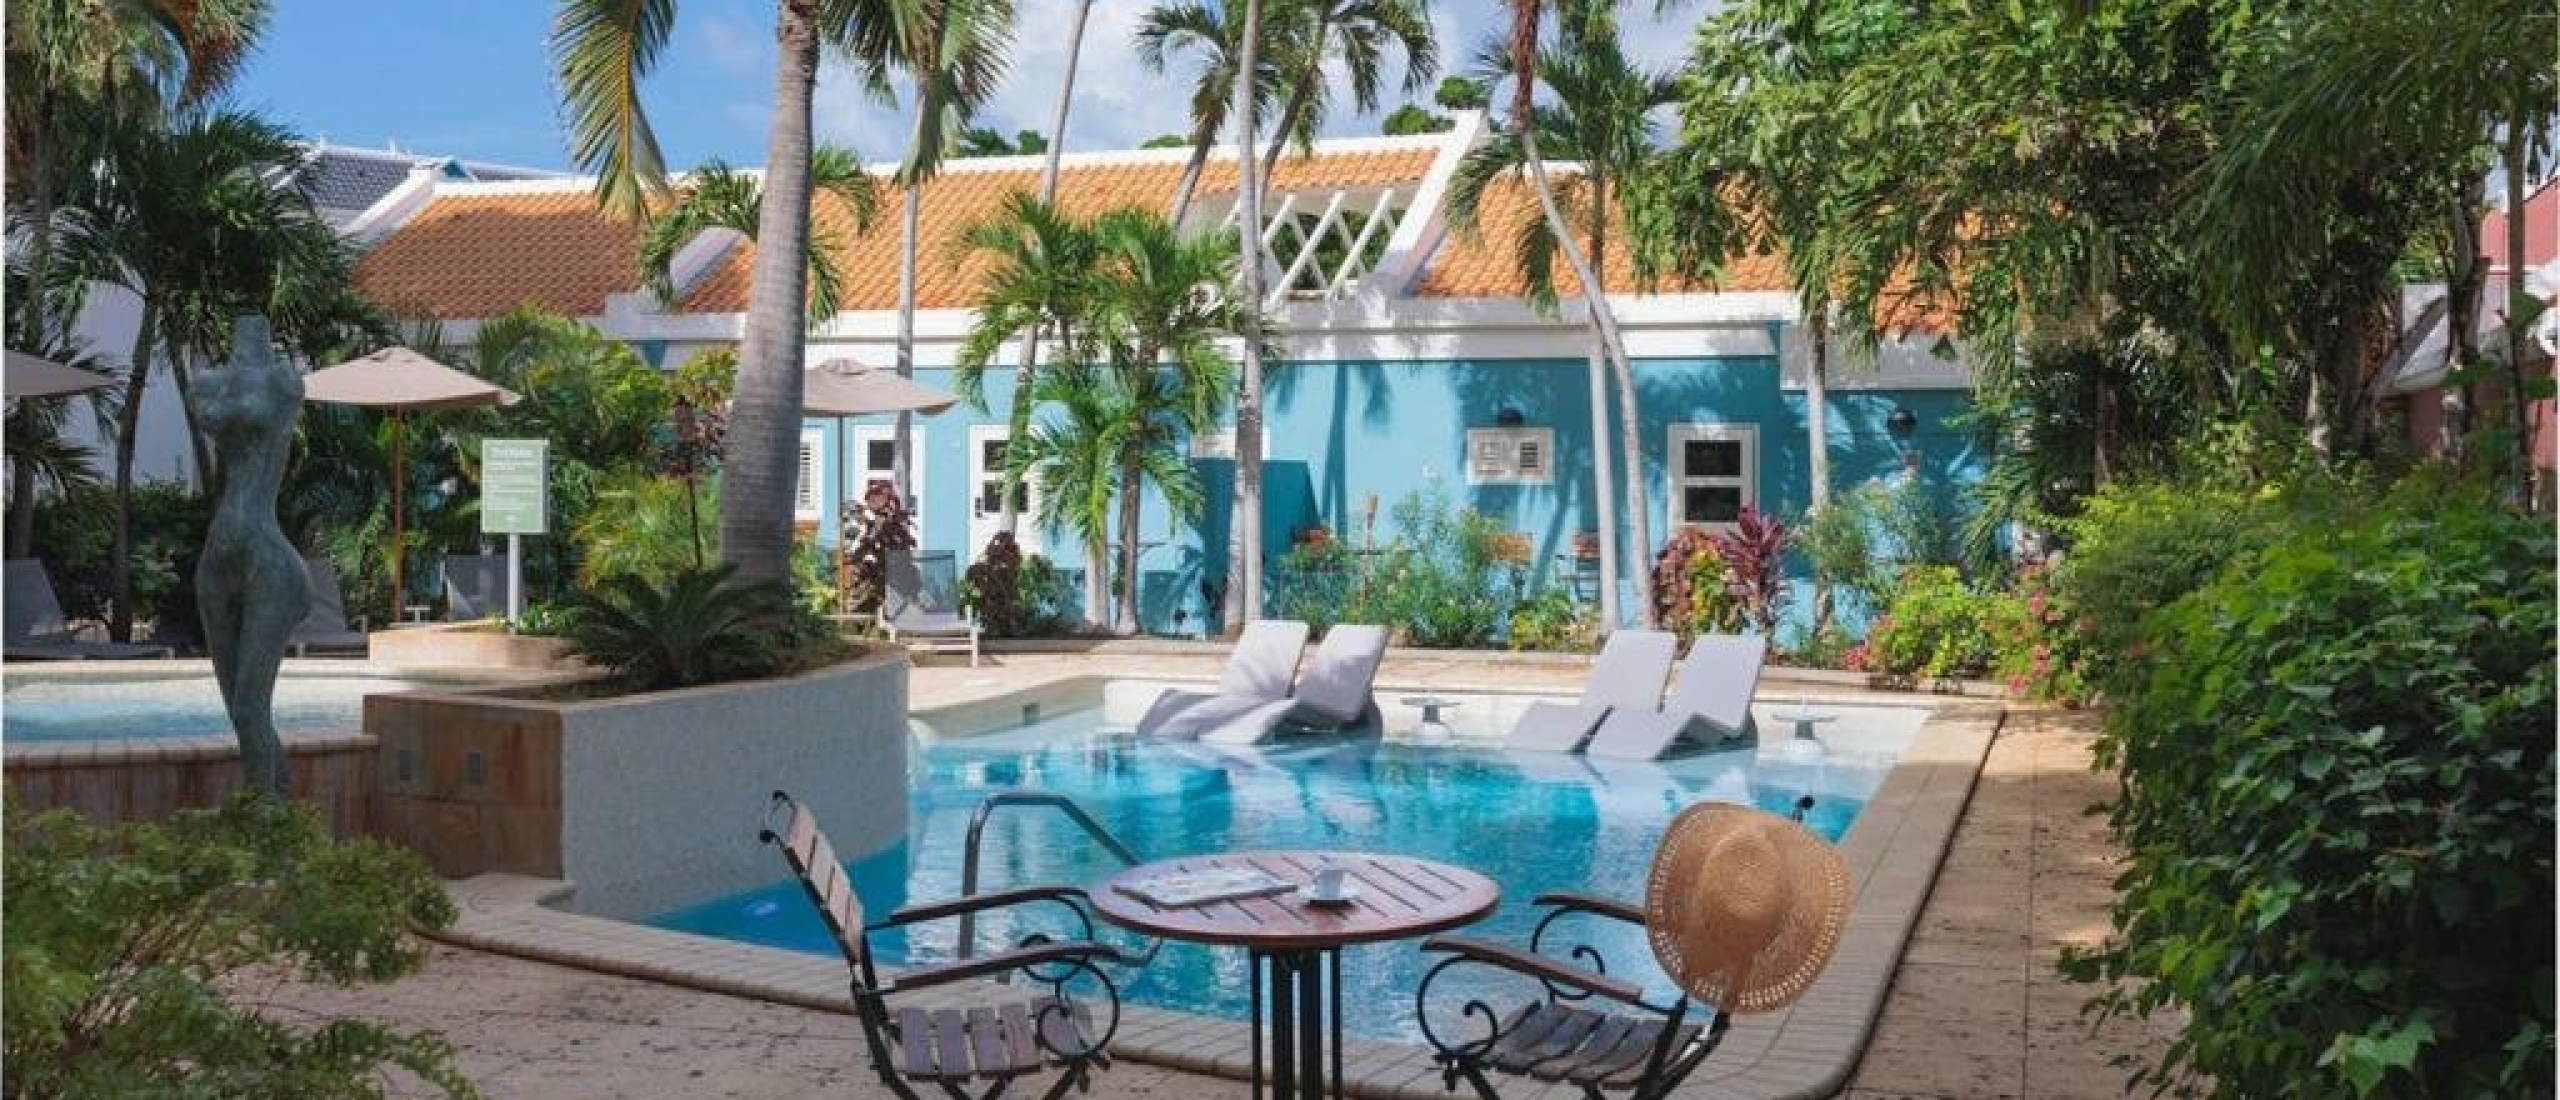 Kura Botanica, boutique hotel op Curacao